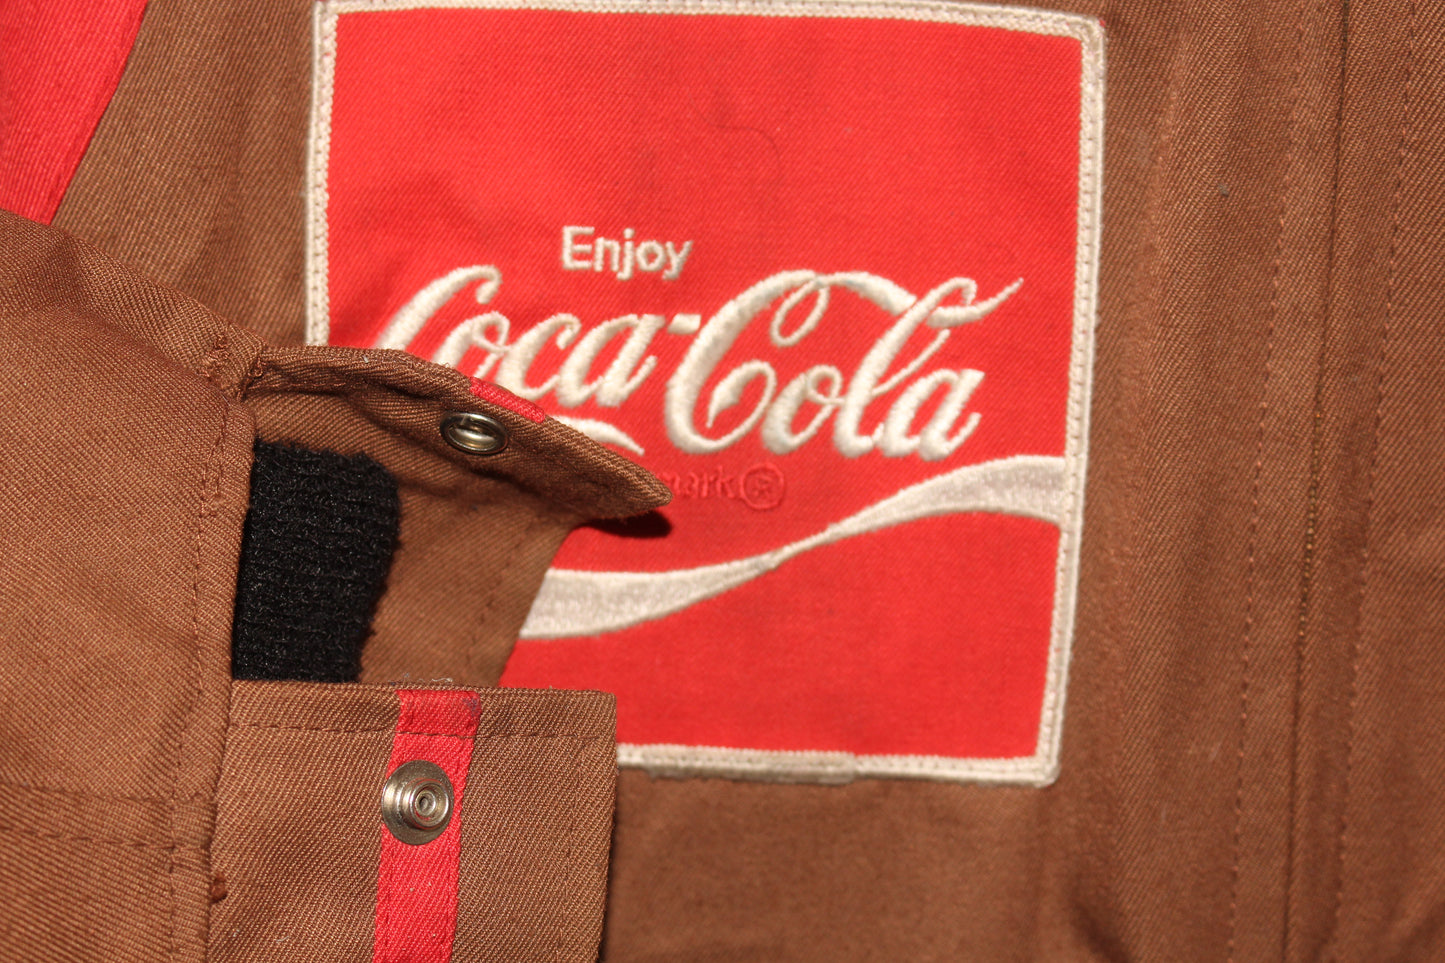 Coca Cola Delivery Truck Jacket (M)